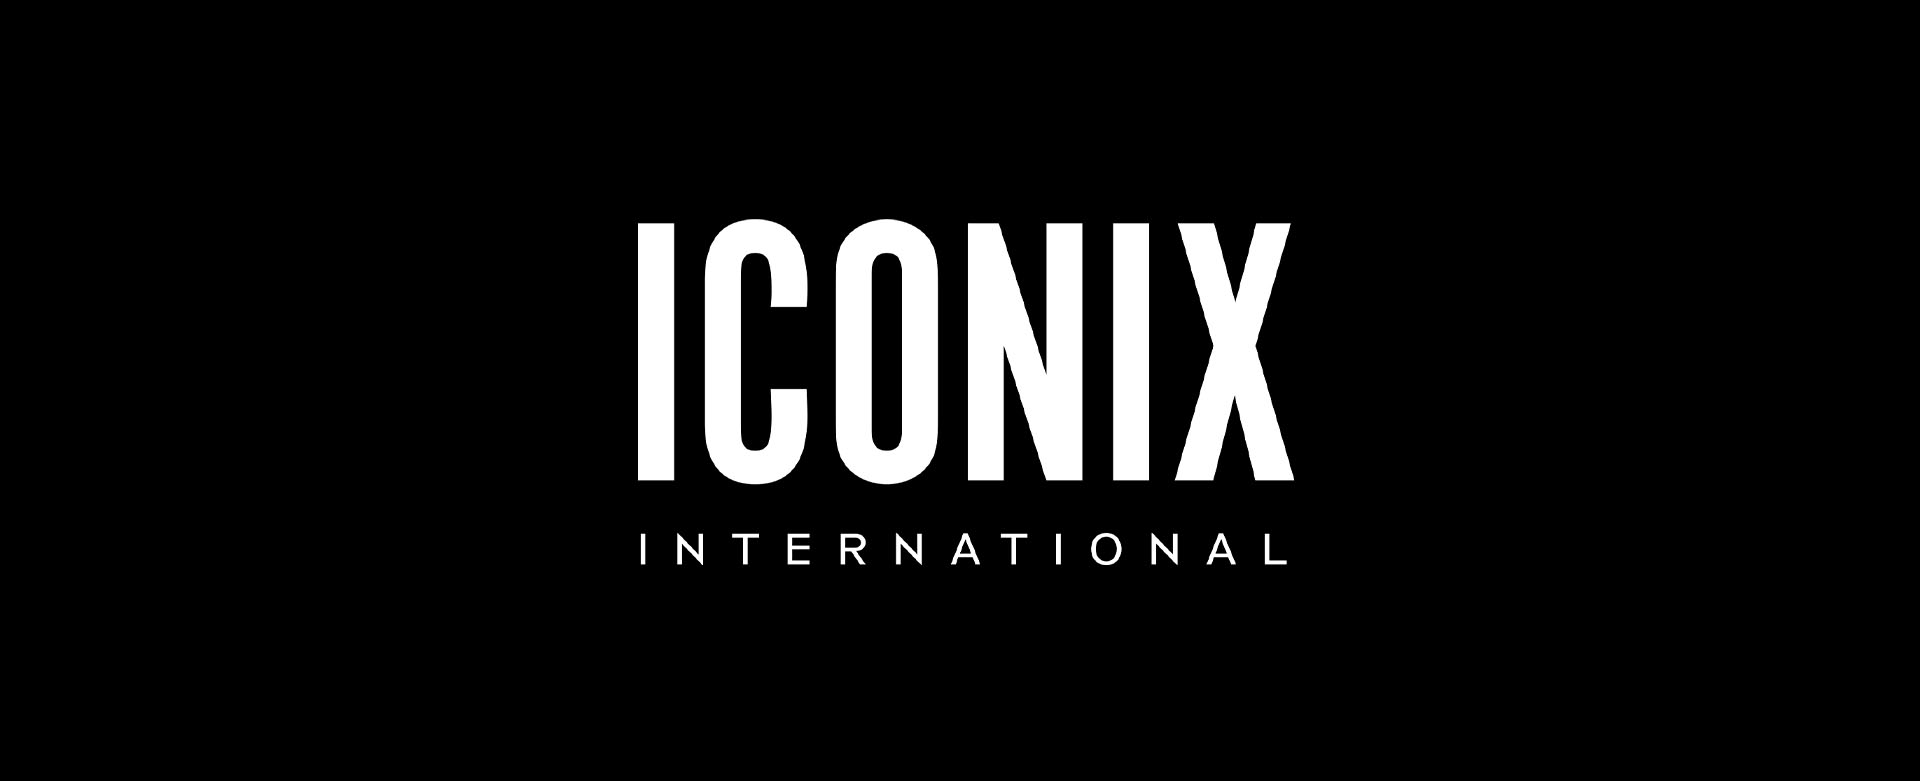 News – Iconix International